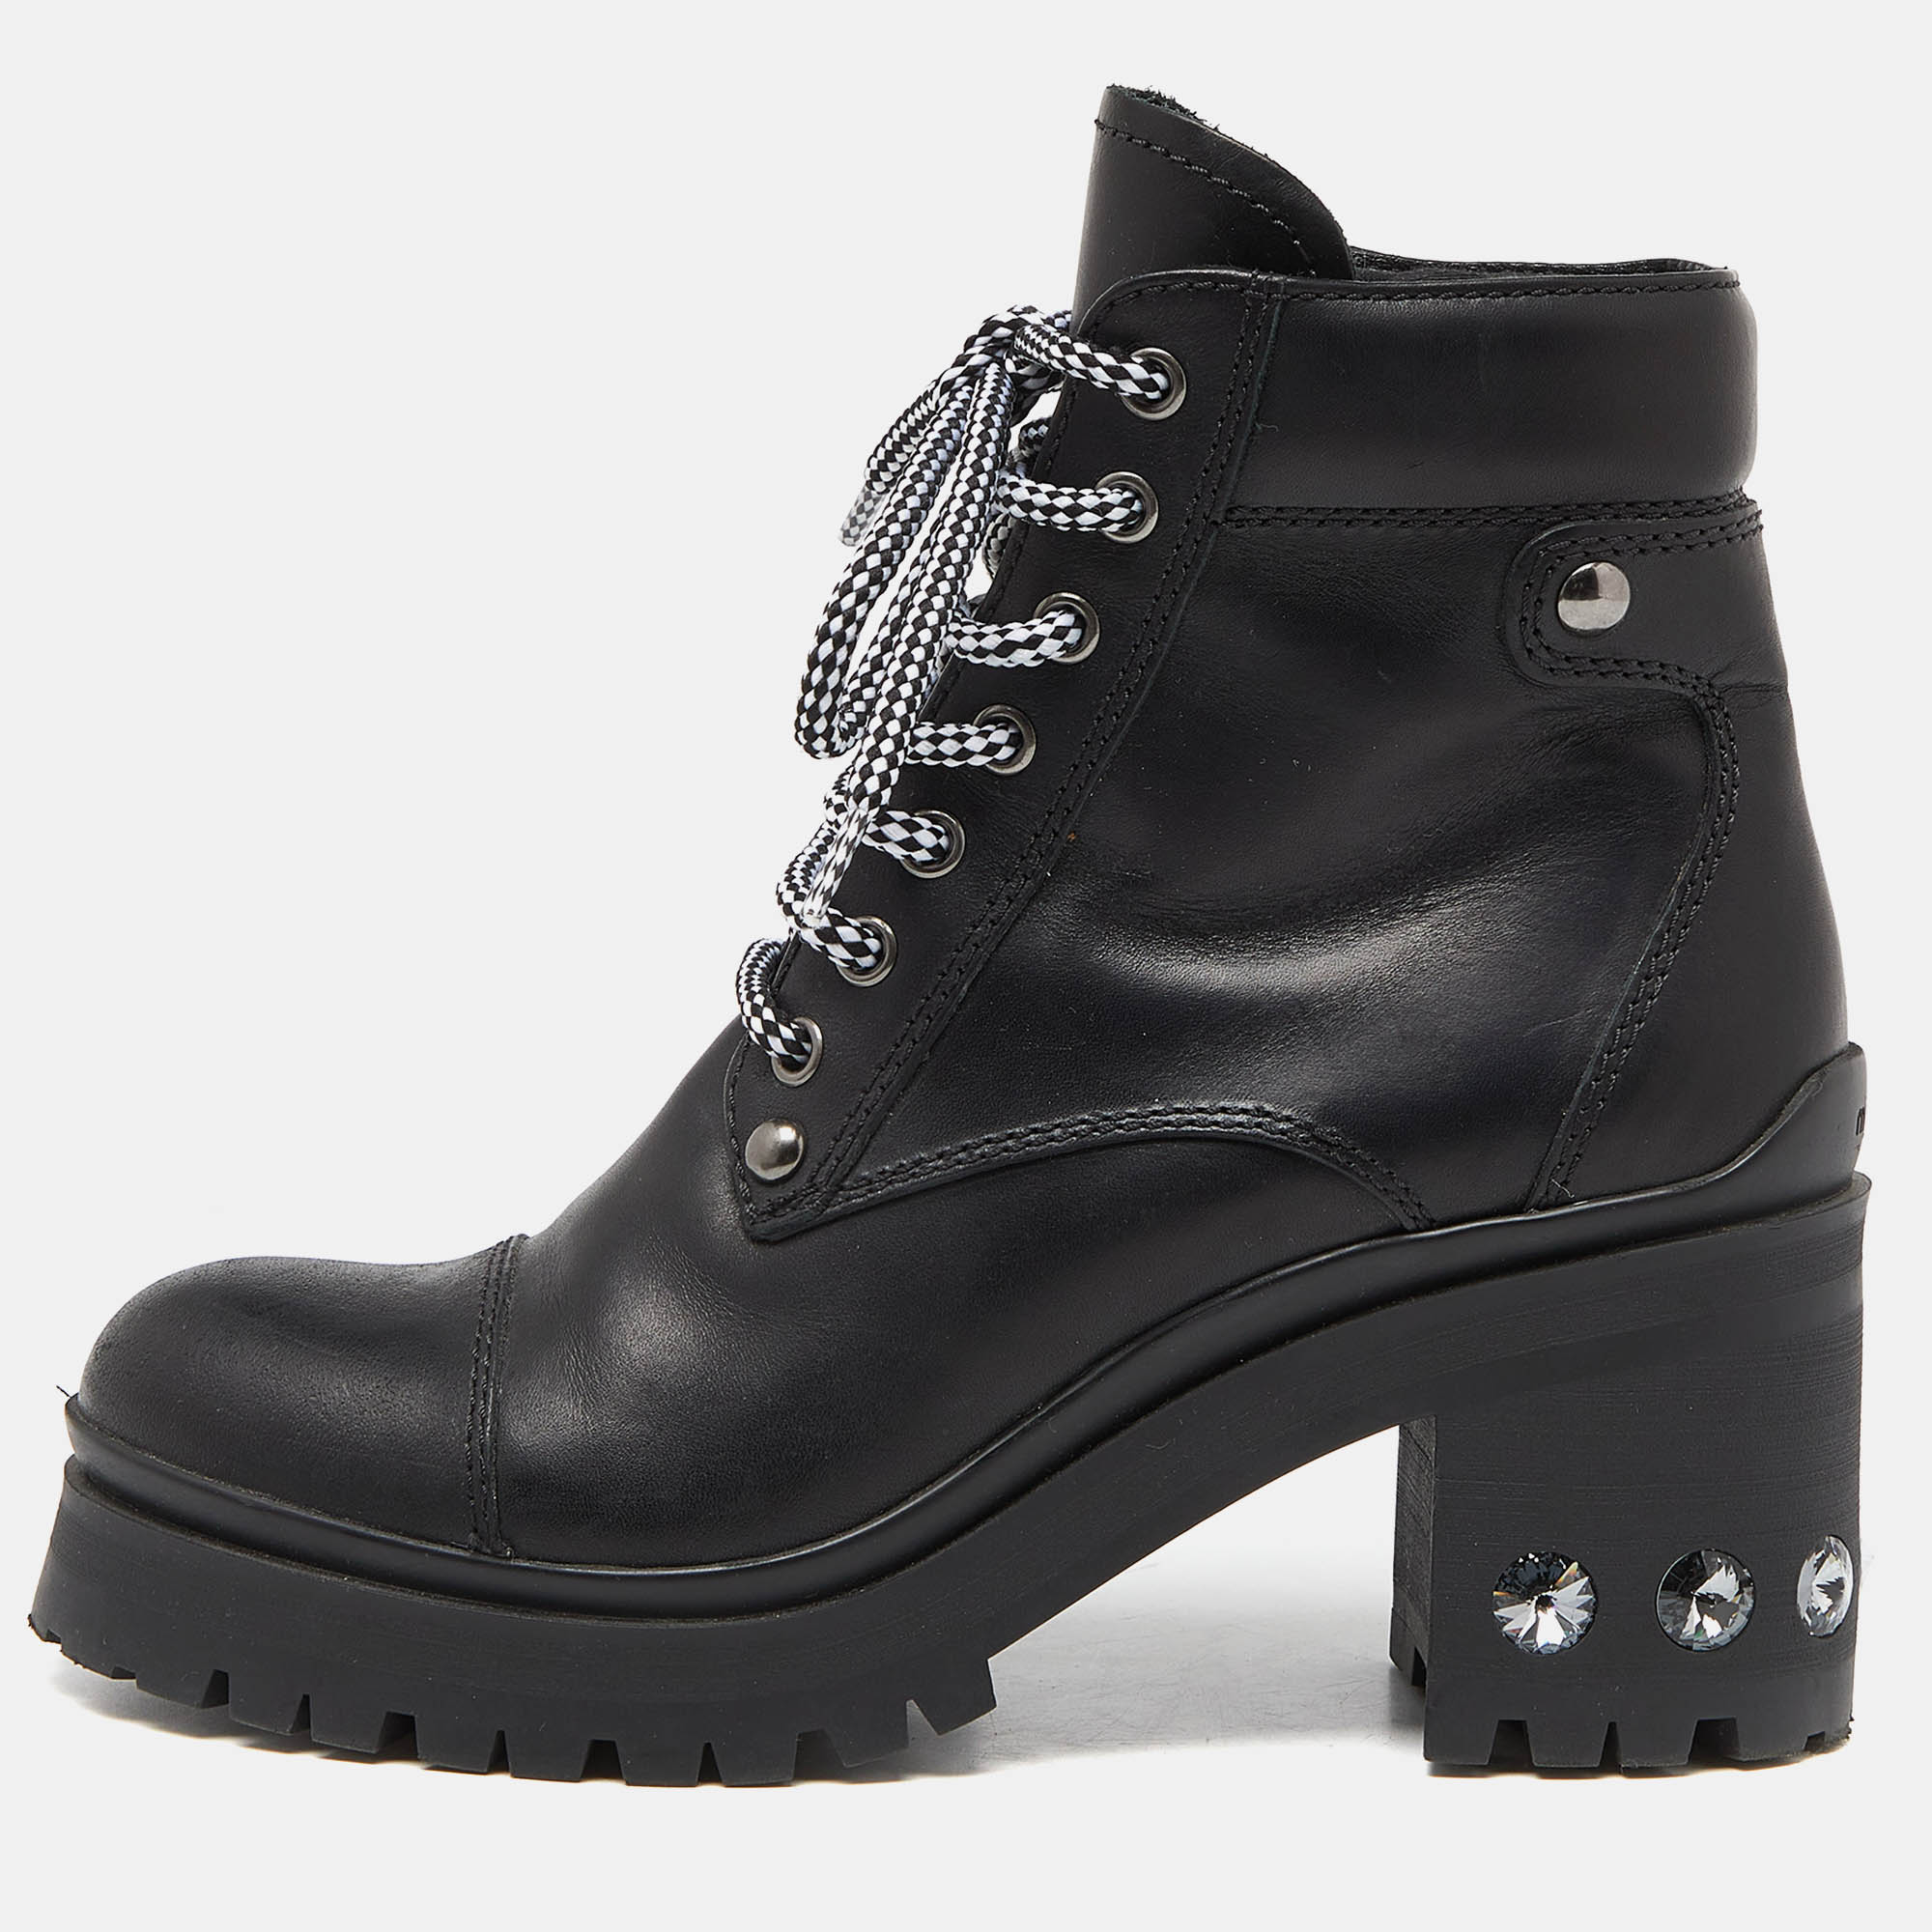 Miu miu black leather lace up combat boots size 37.5